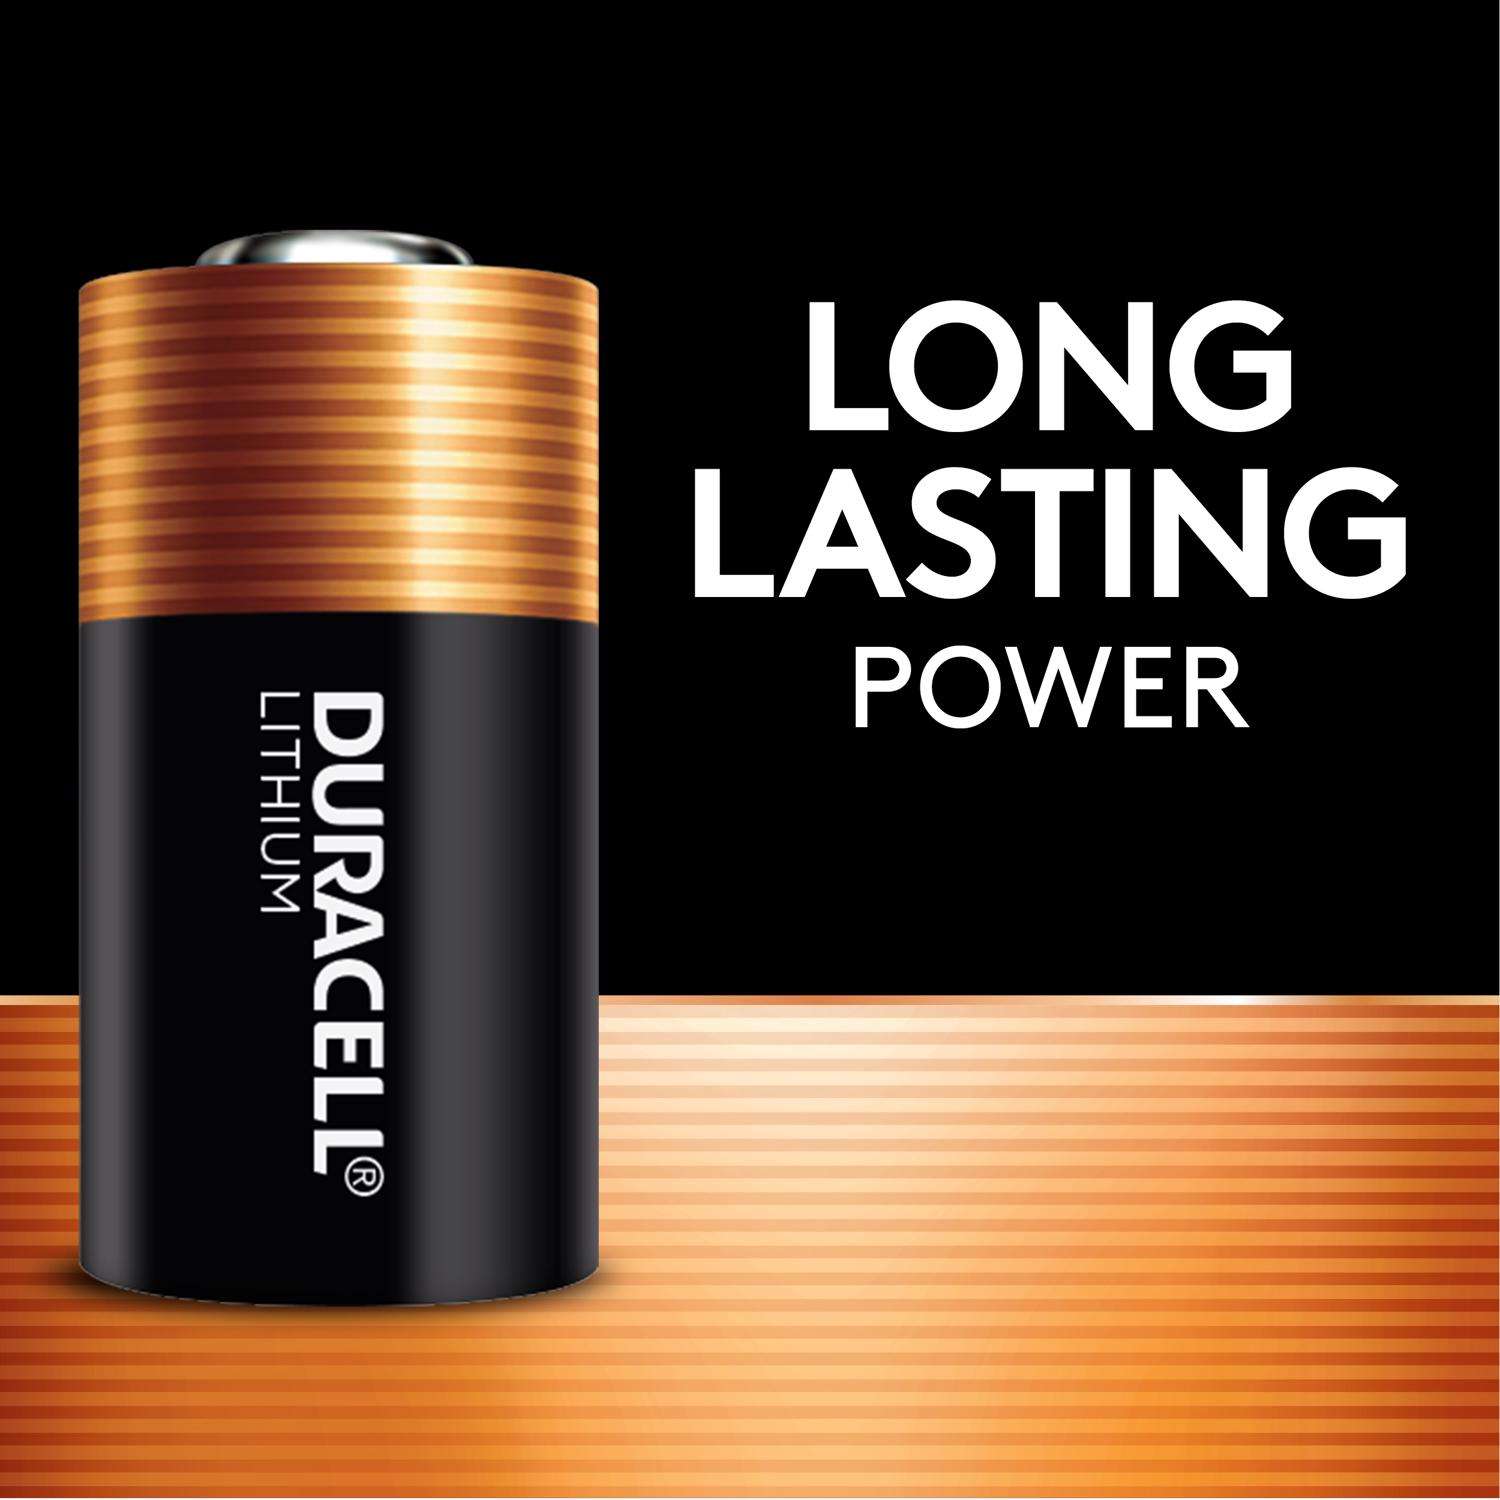 CR123 DURACELL - Battery: lithium